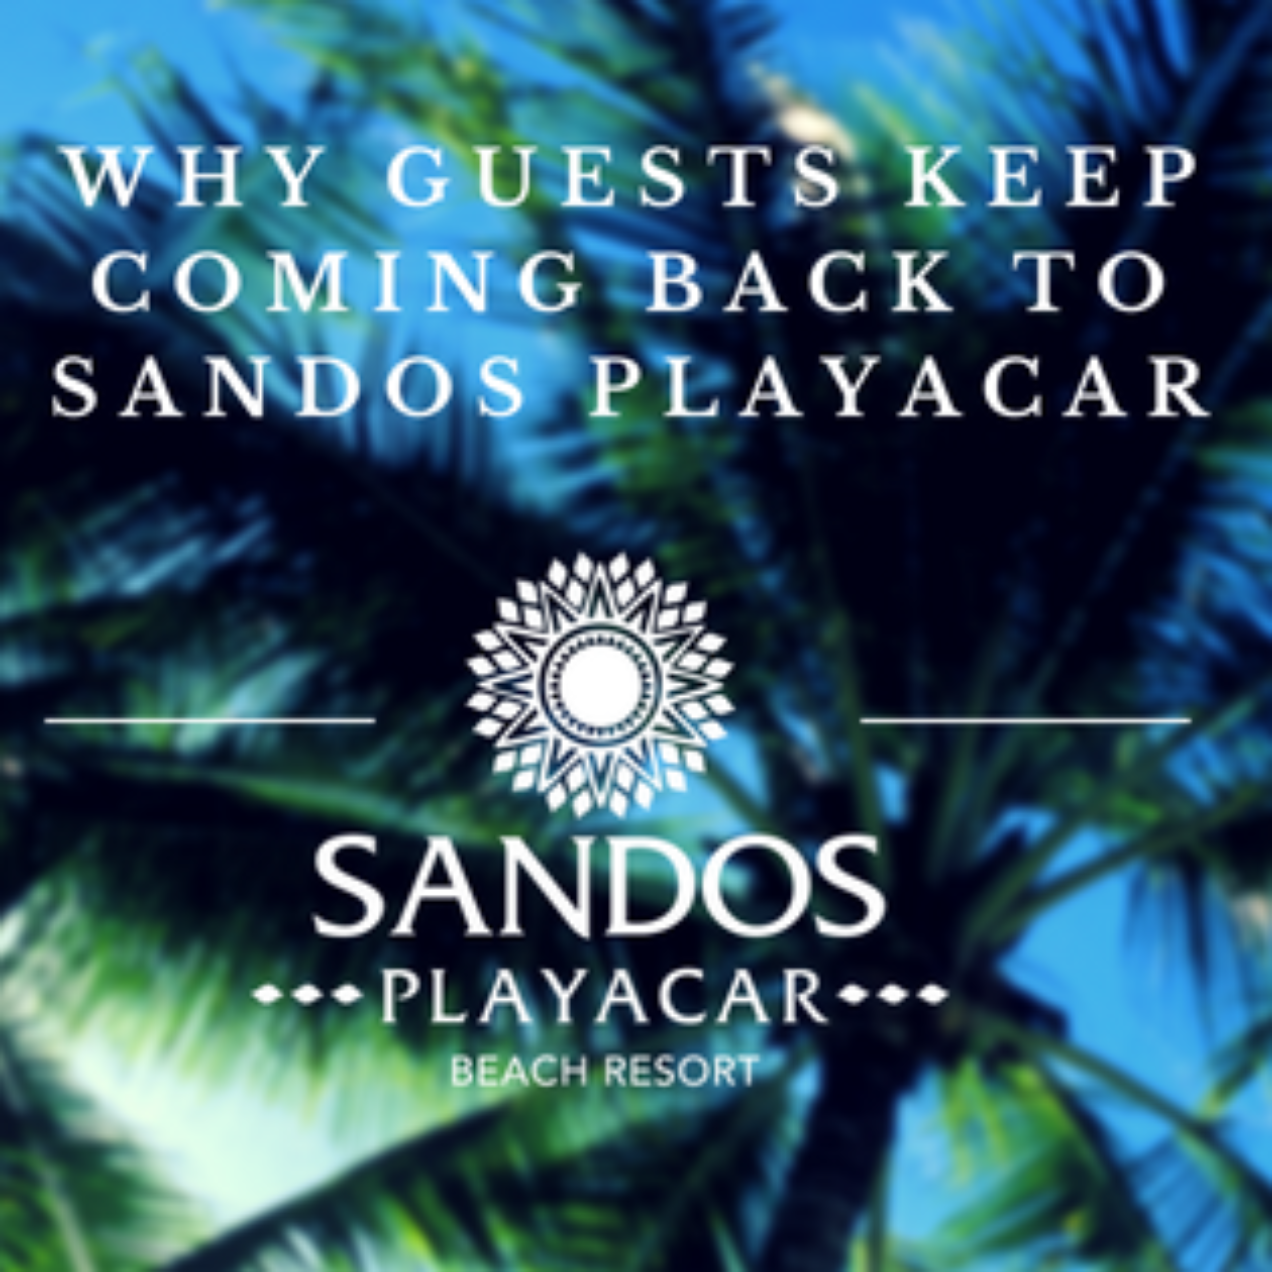 Why guests keep coming back to Sandos Playacar